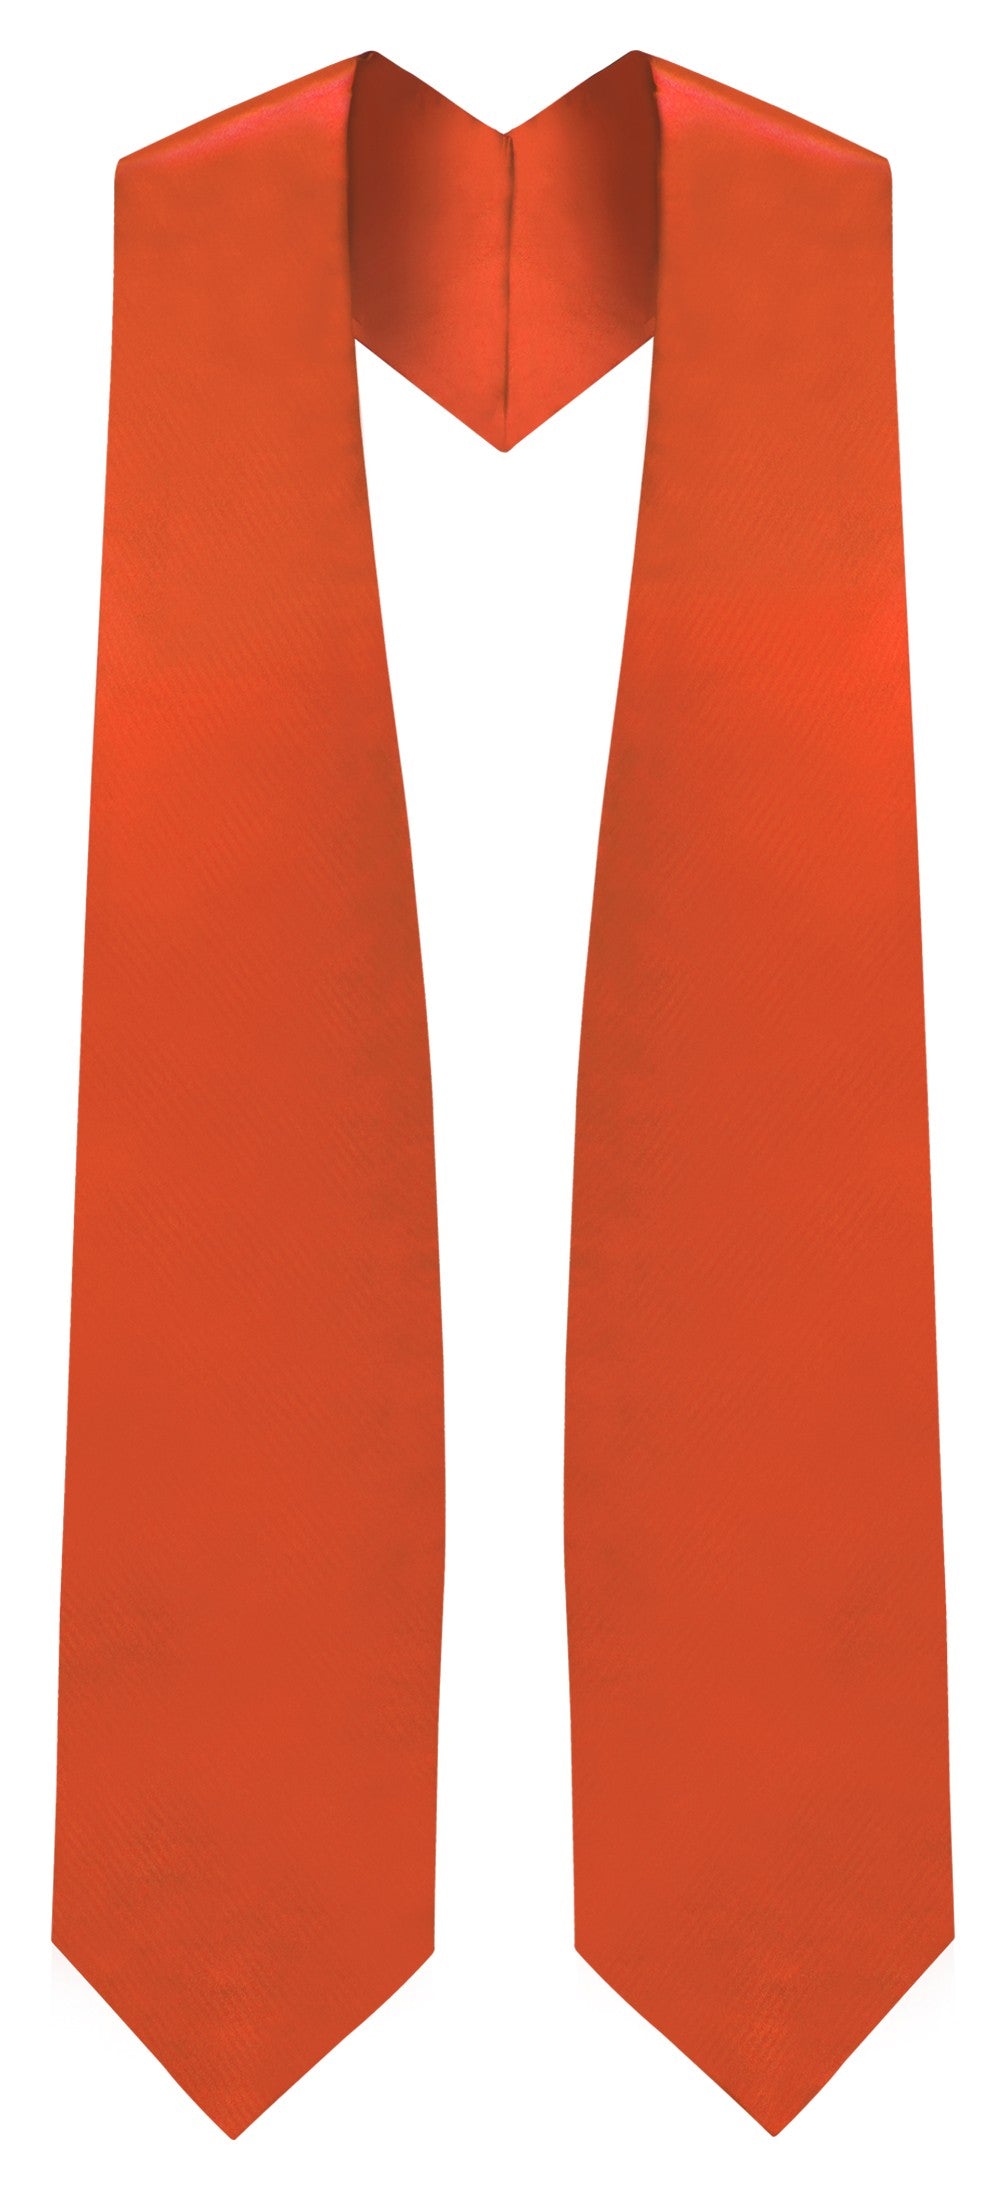 Orange Graduation Stole - Orange College & High School Stoles - Graduation Cap and Gown